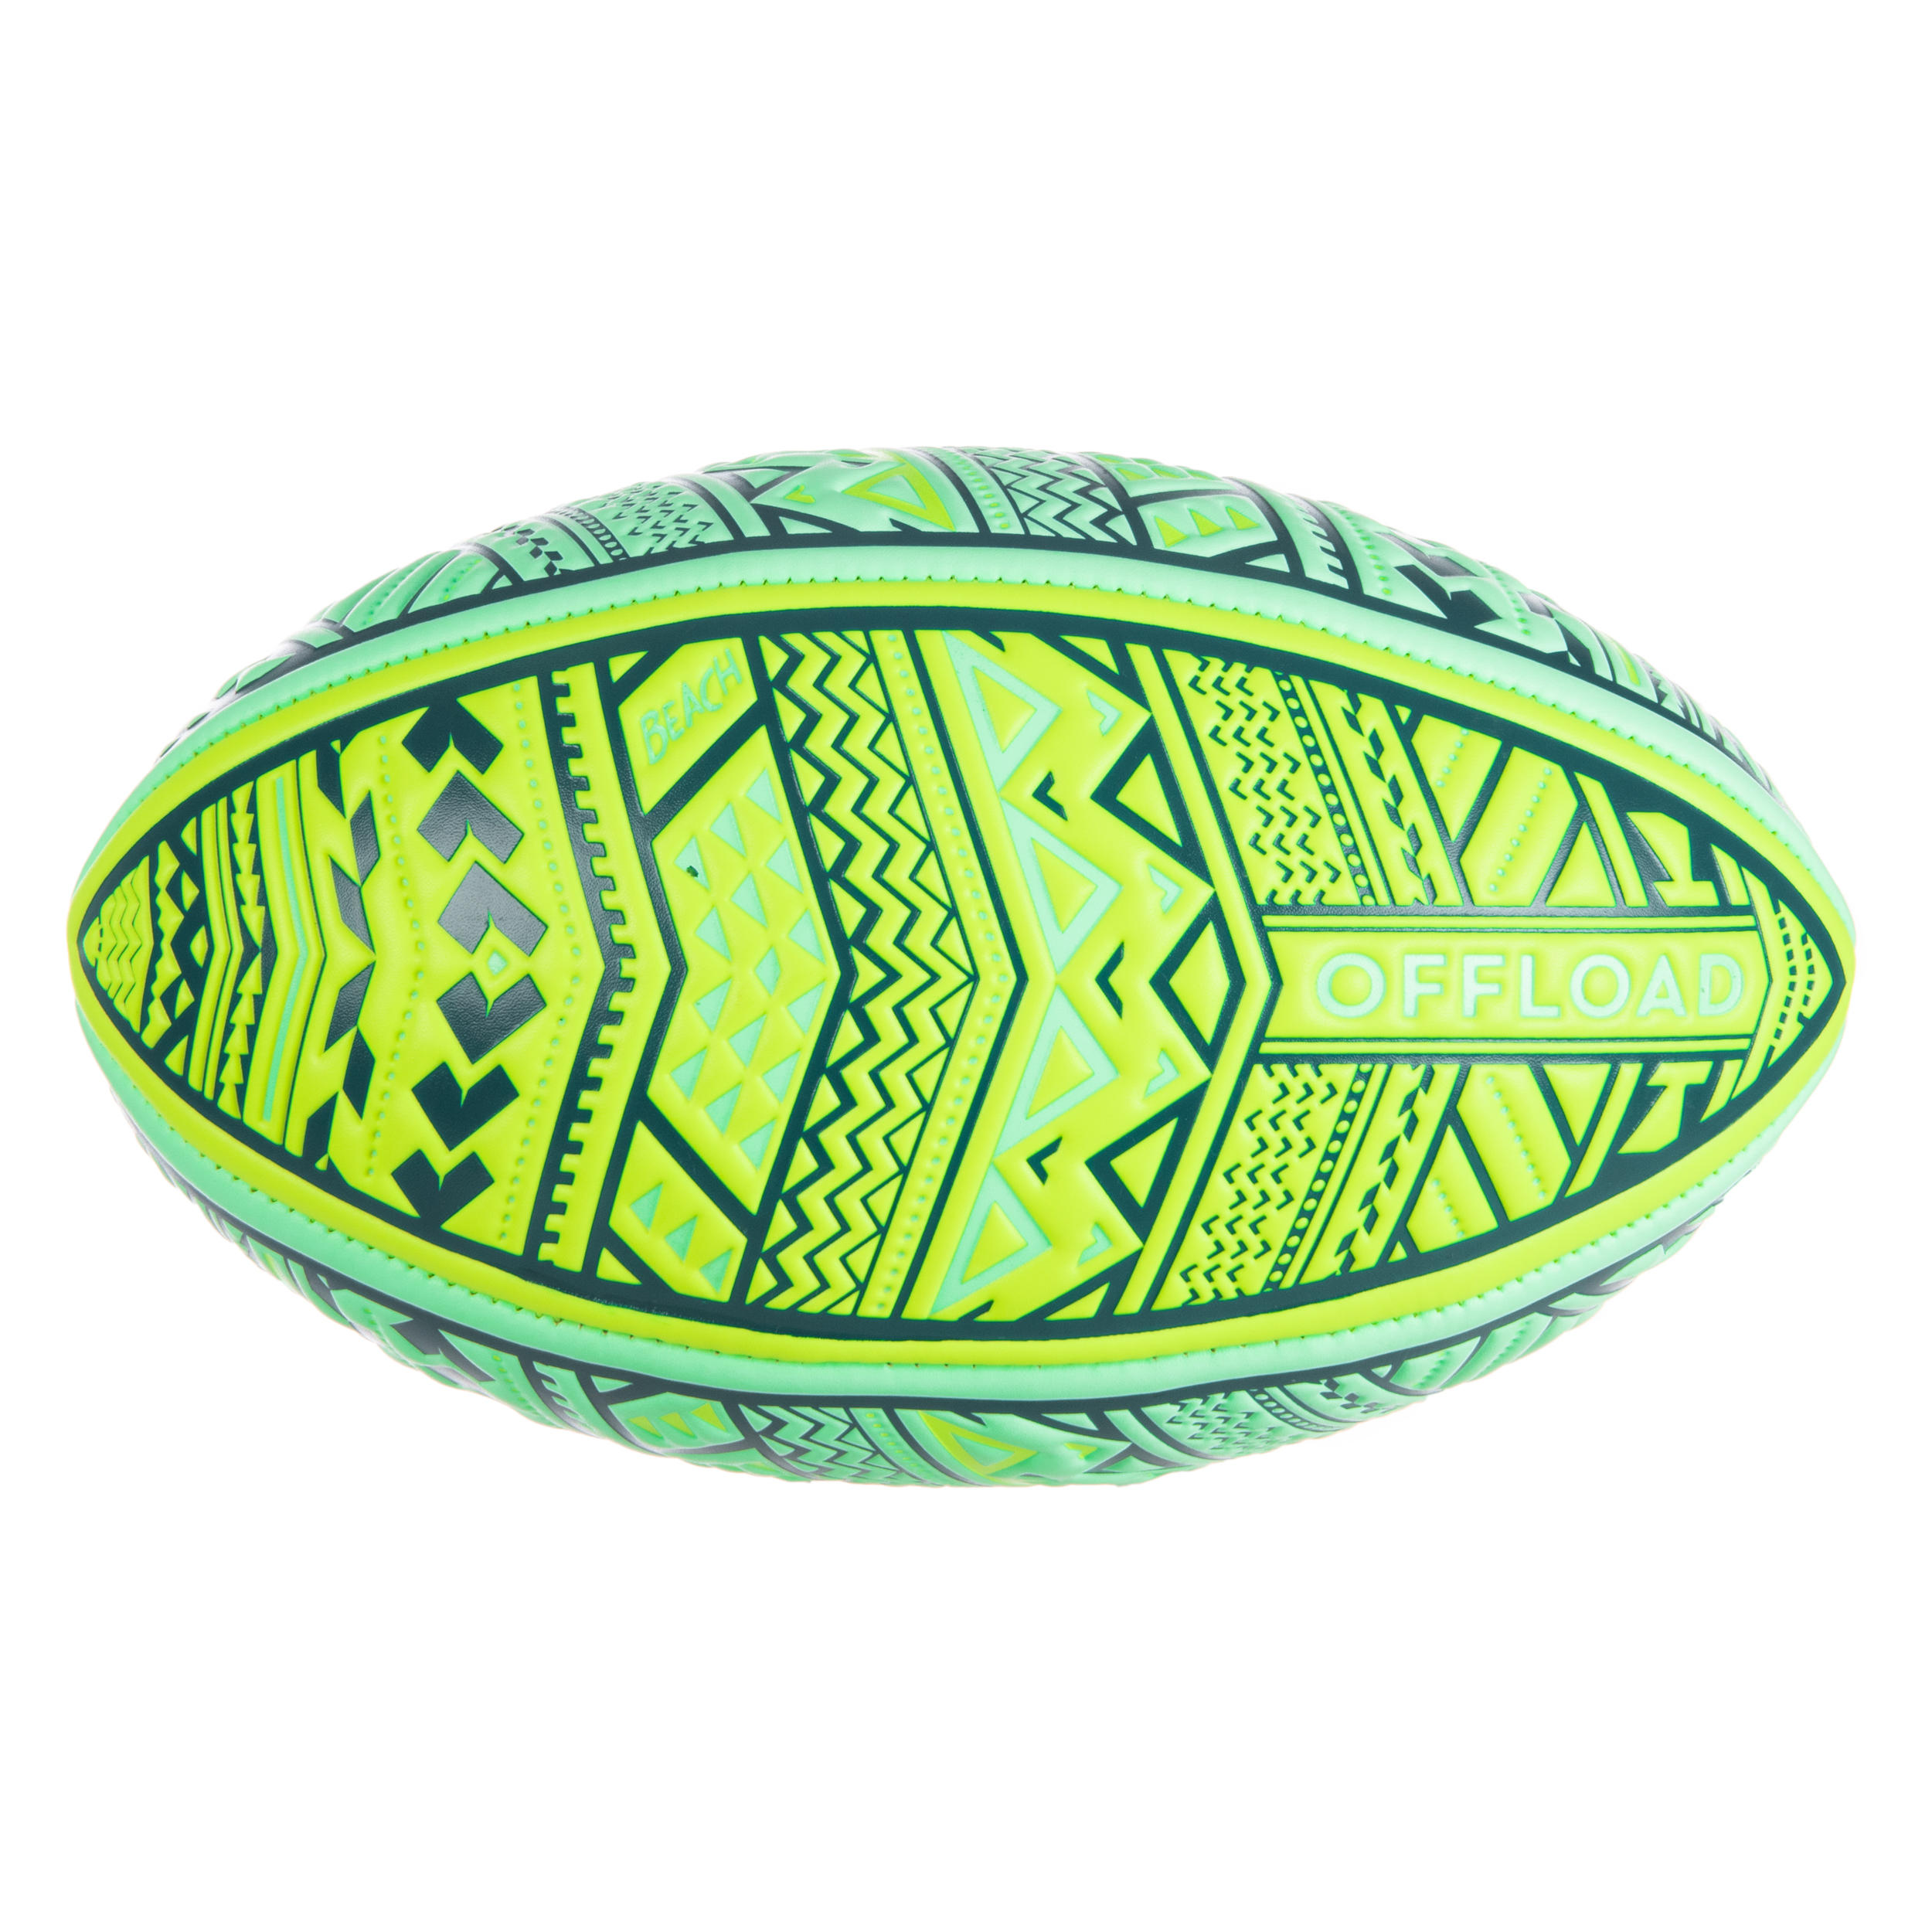 OFFLOAD Beach Rugby Ball R100 Midi Maori Size 1 - Yellow/Green